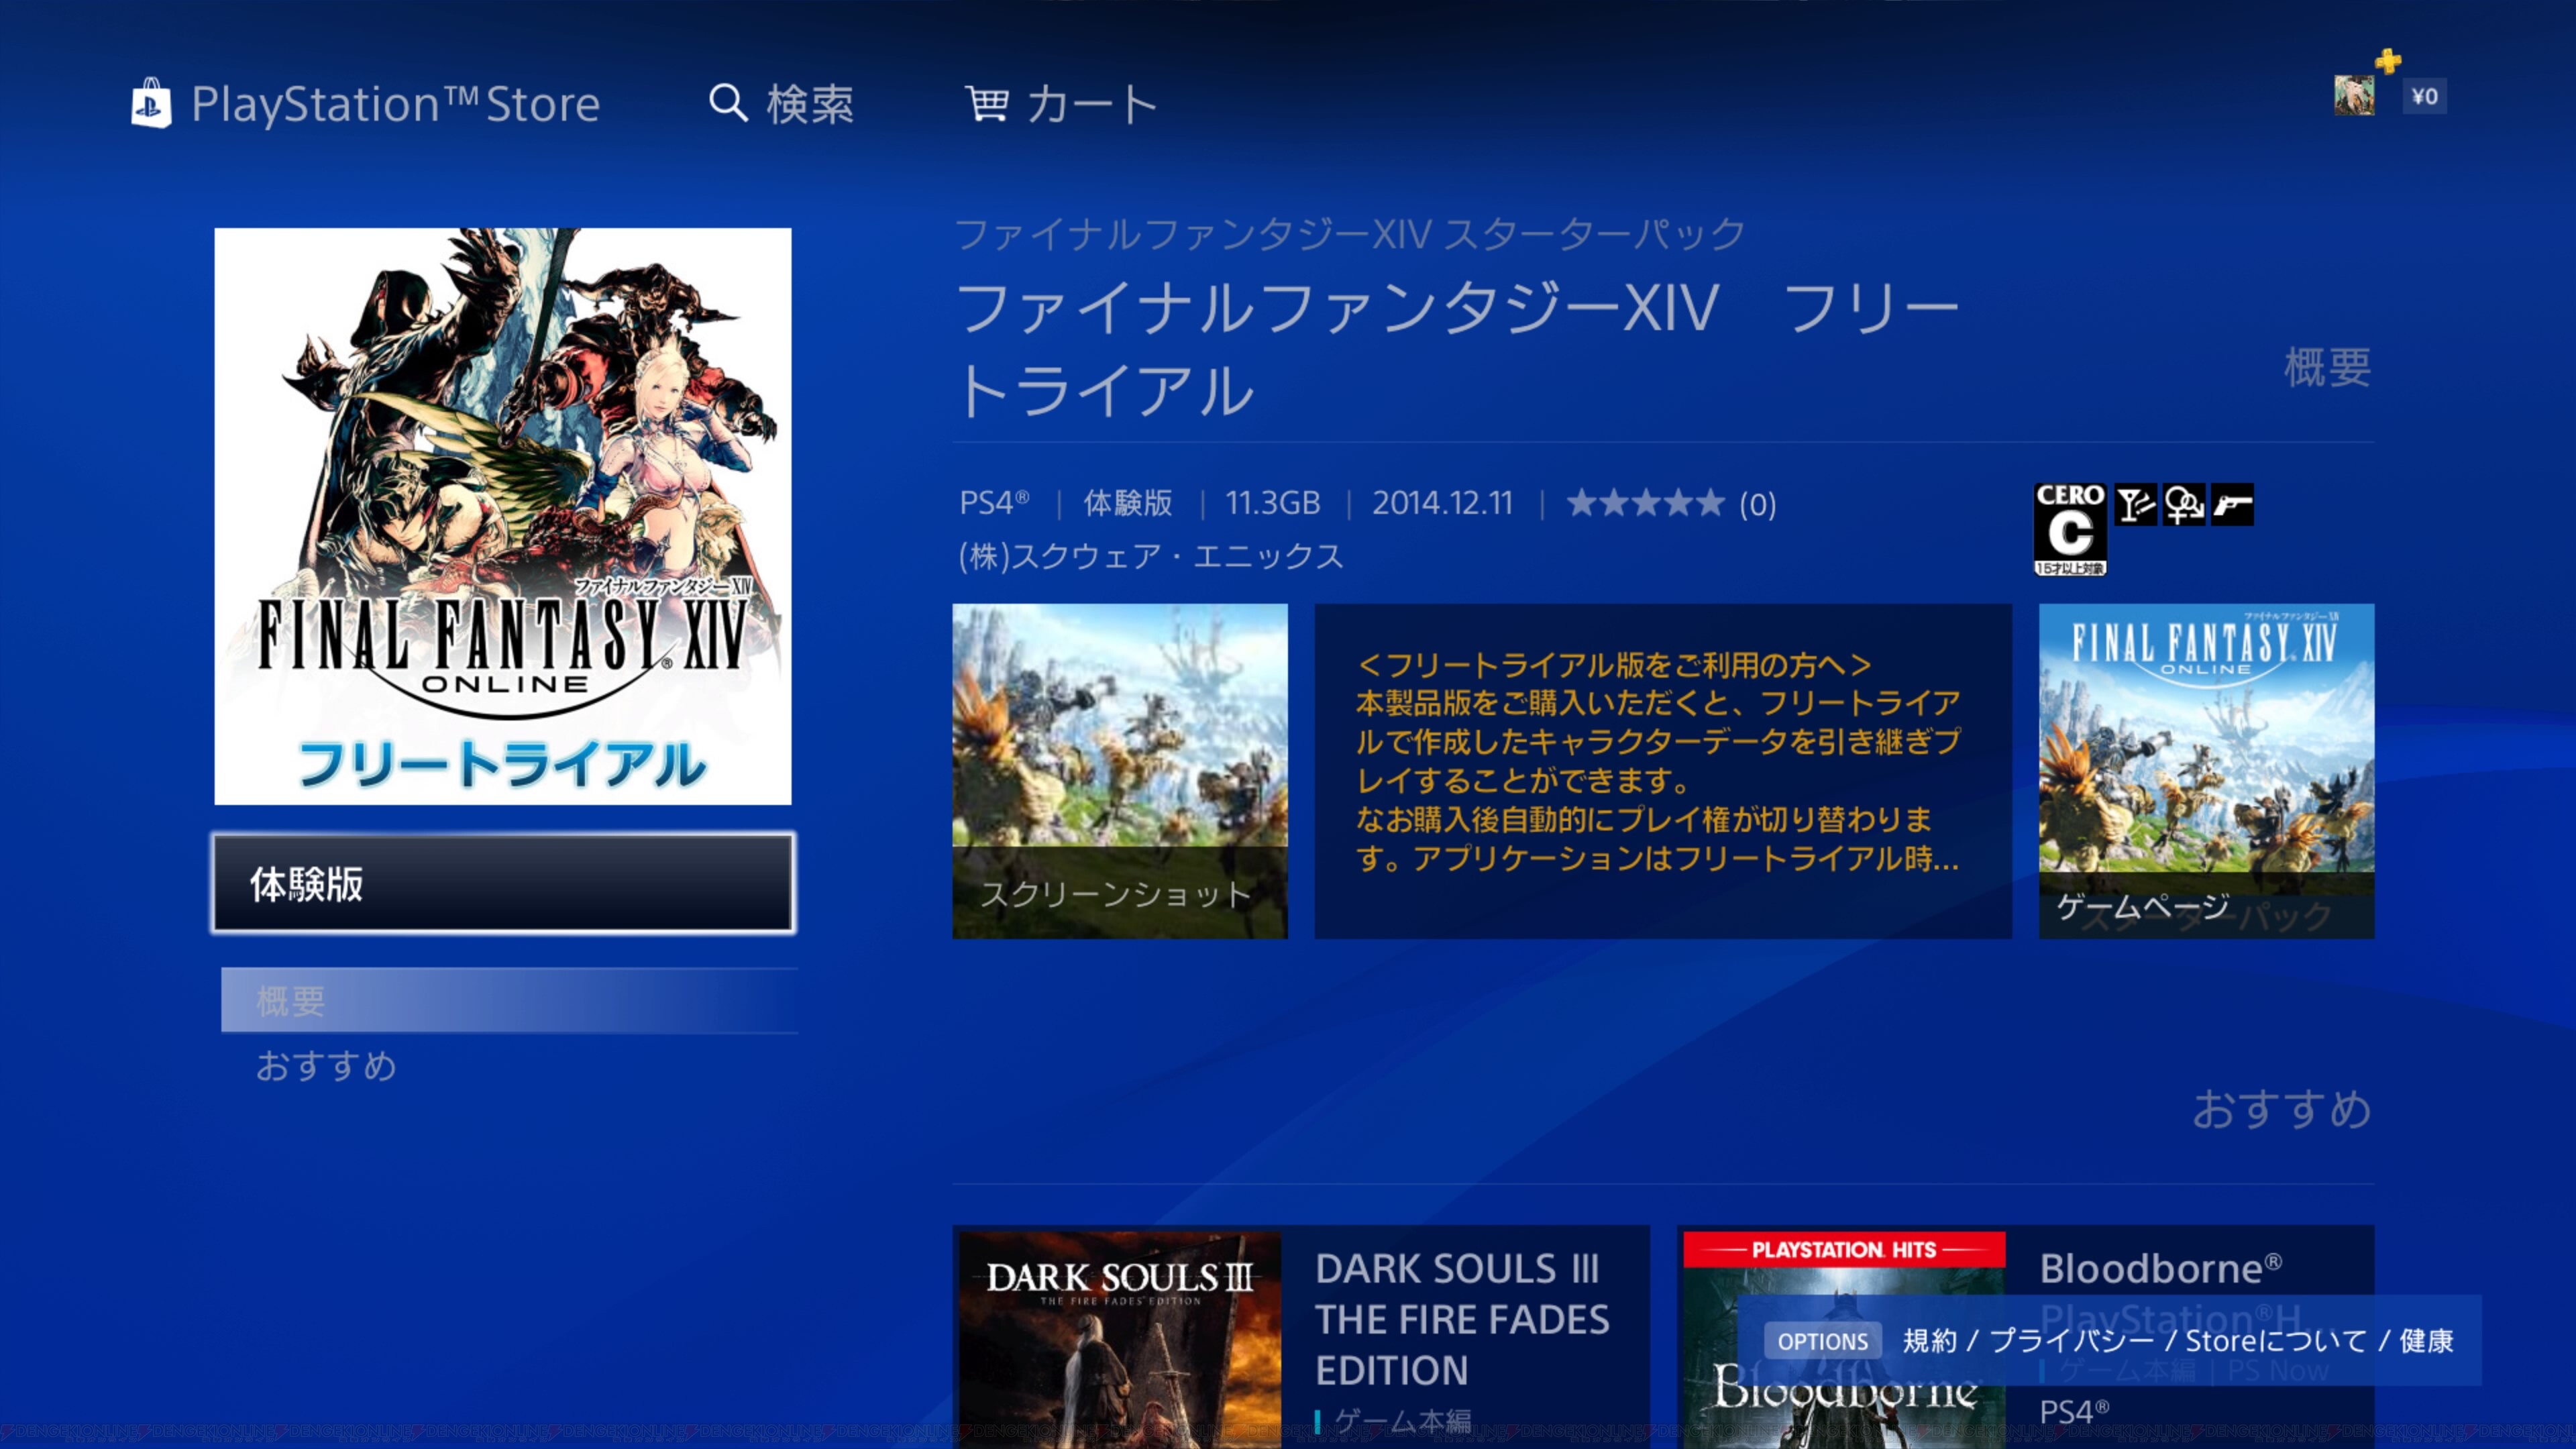 Review: Final Fantasy XIV: Stormblood (Sony PlayStation 4) - Digitally